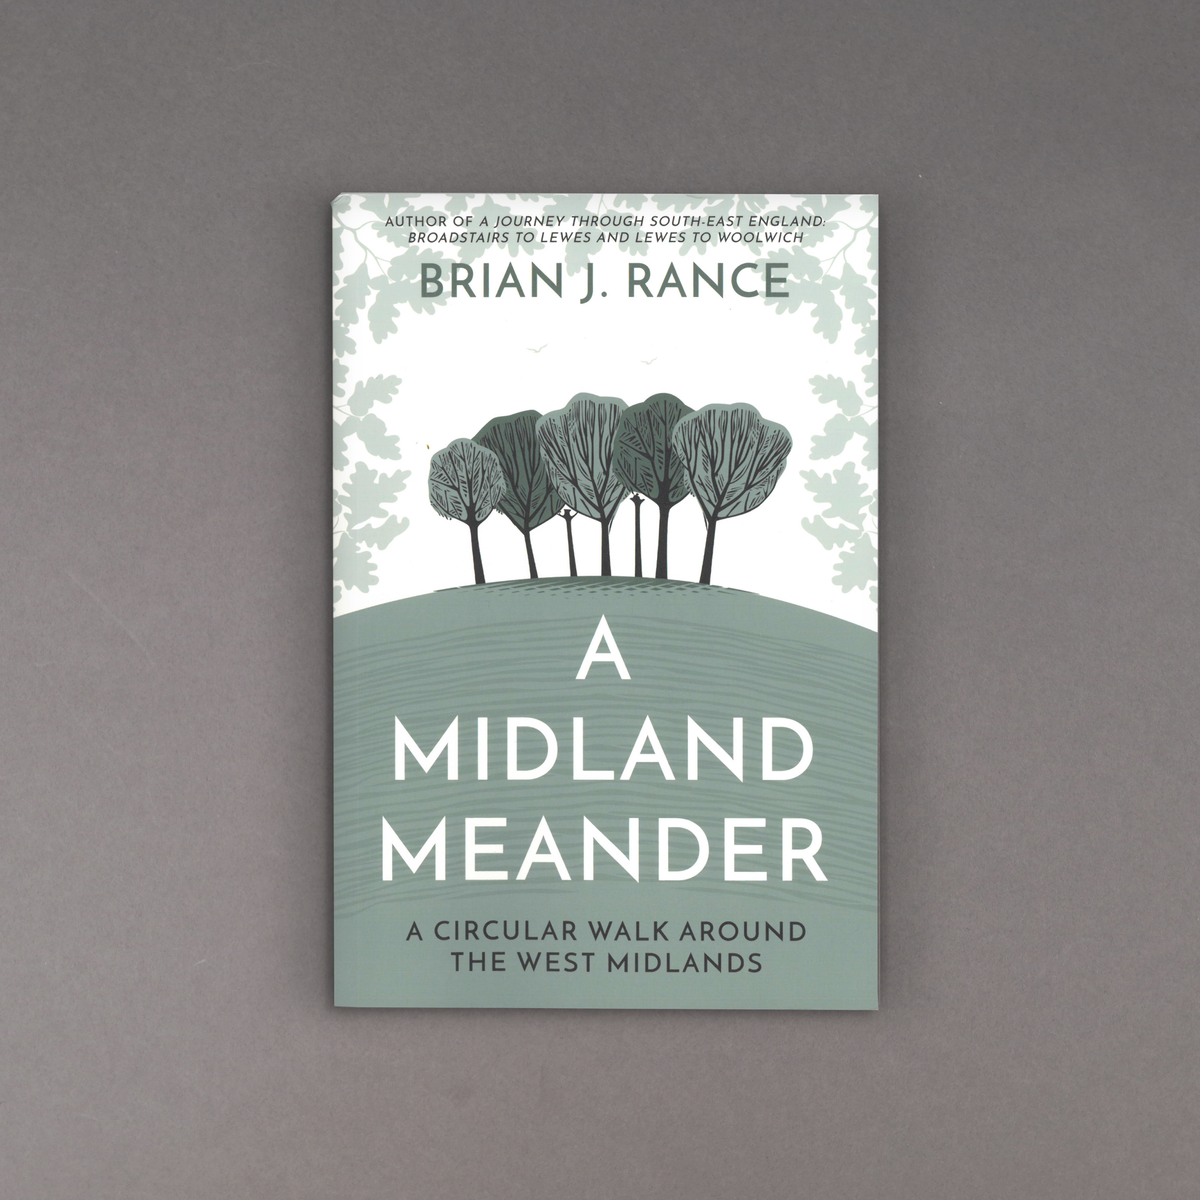 A Midland Meander